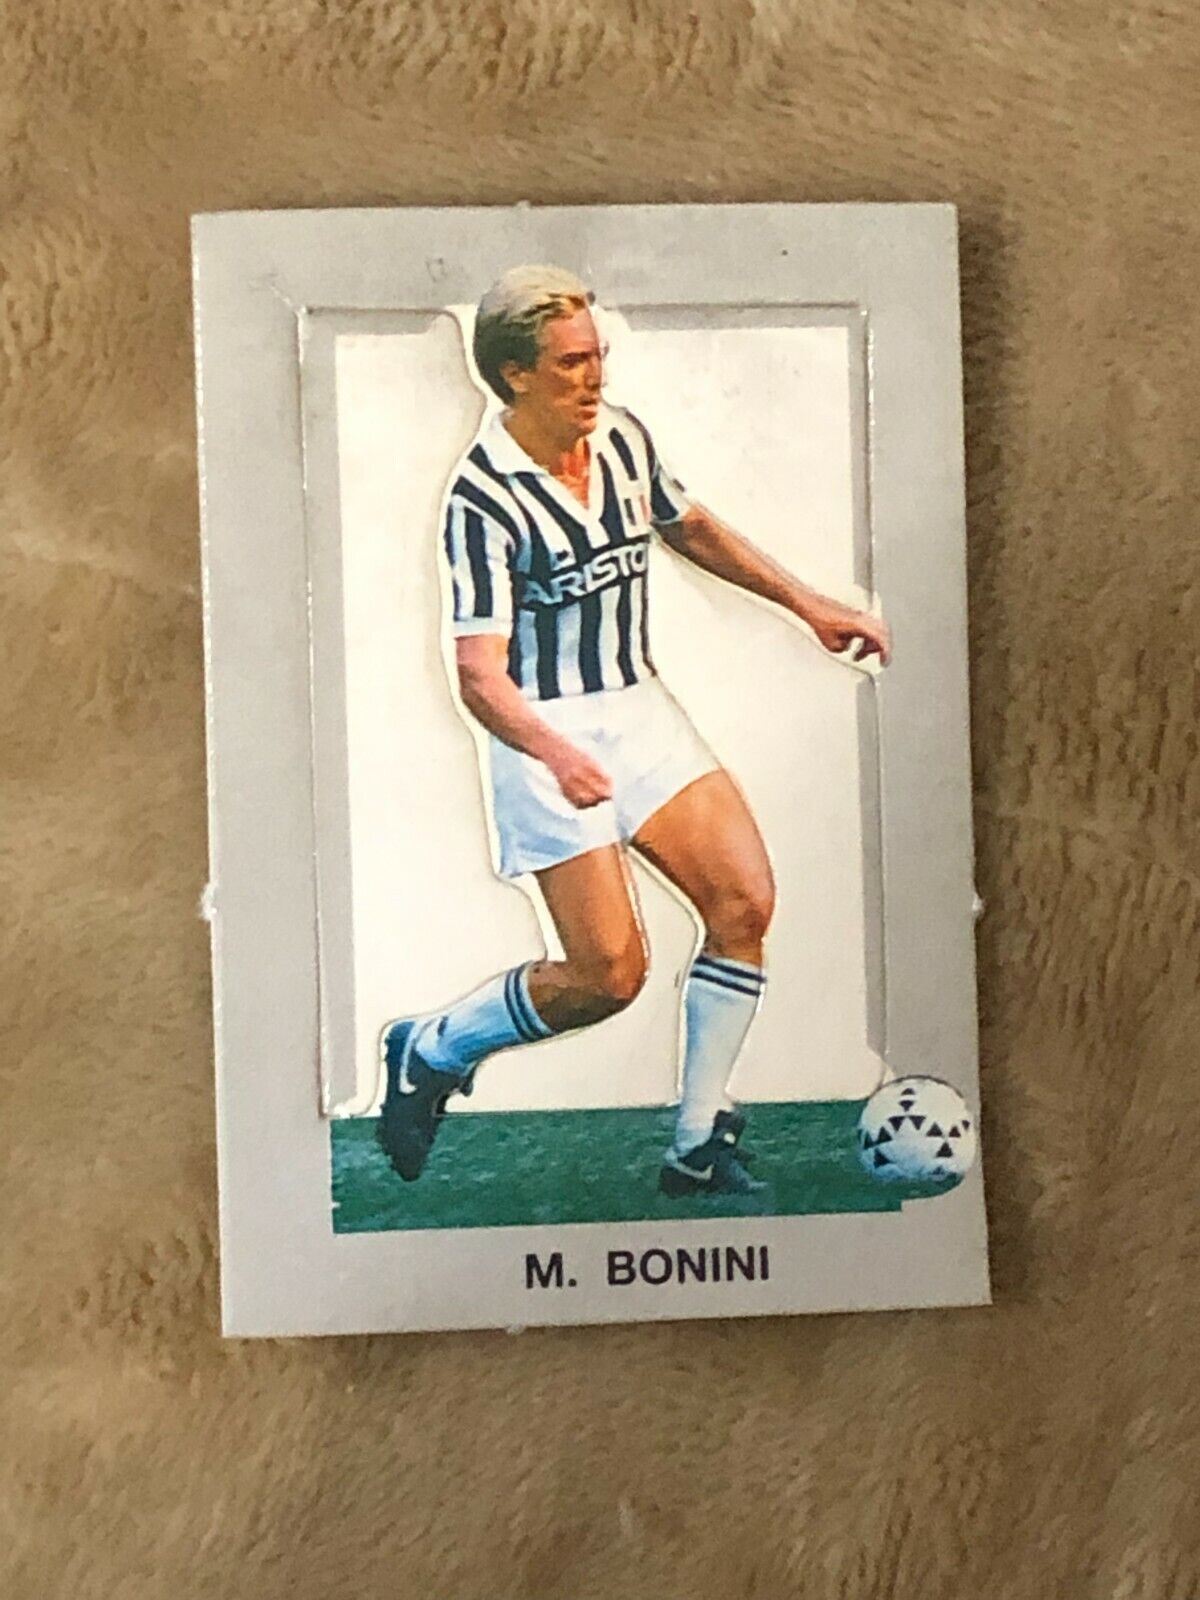 Figurina fustellata M. Bonini Juventus sorpresa patatine anni 80 di Aa.vv.,  198